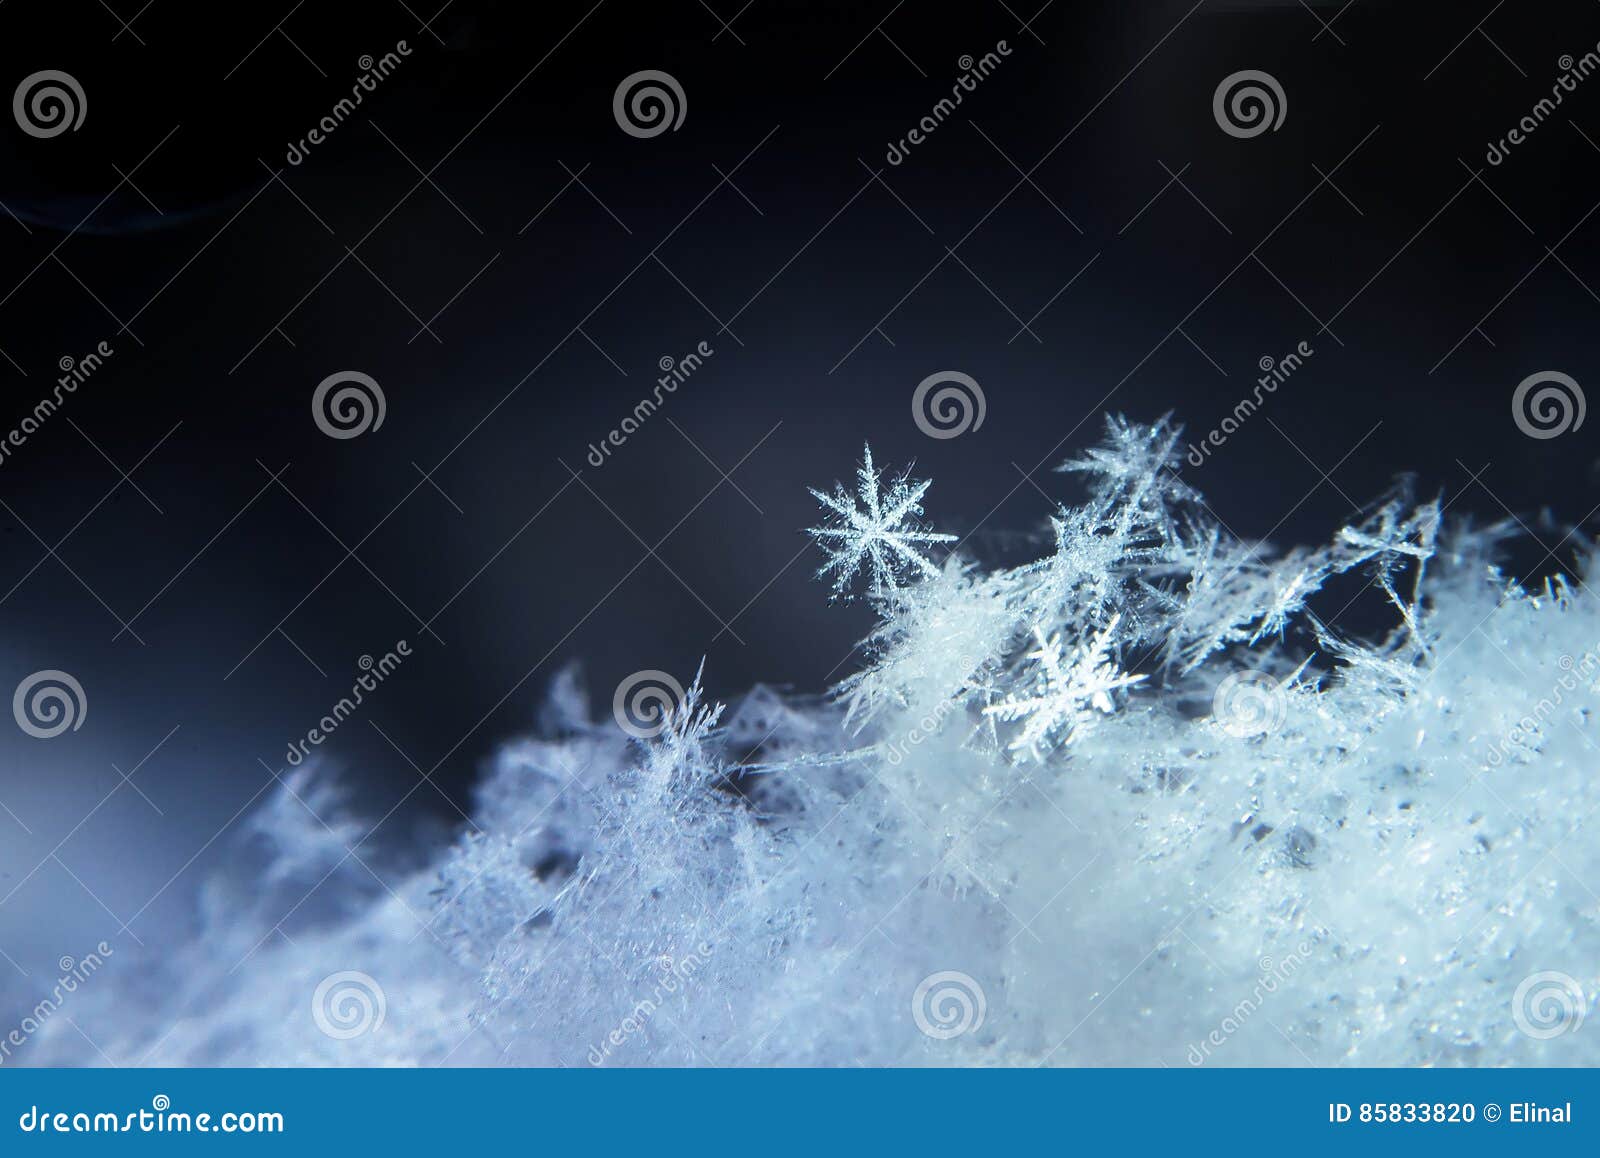 snowflake, snow flake, nature winter background